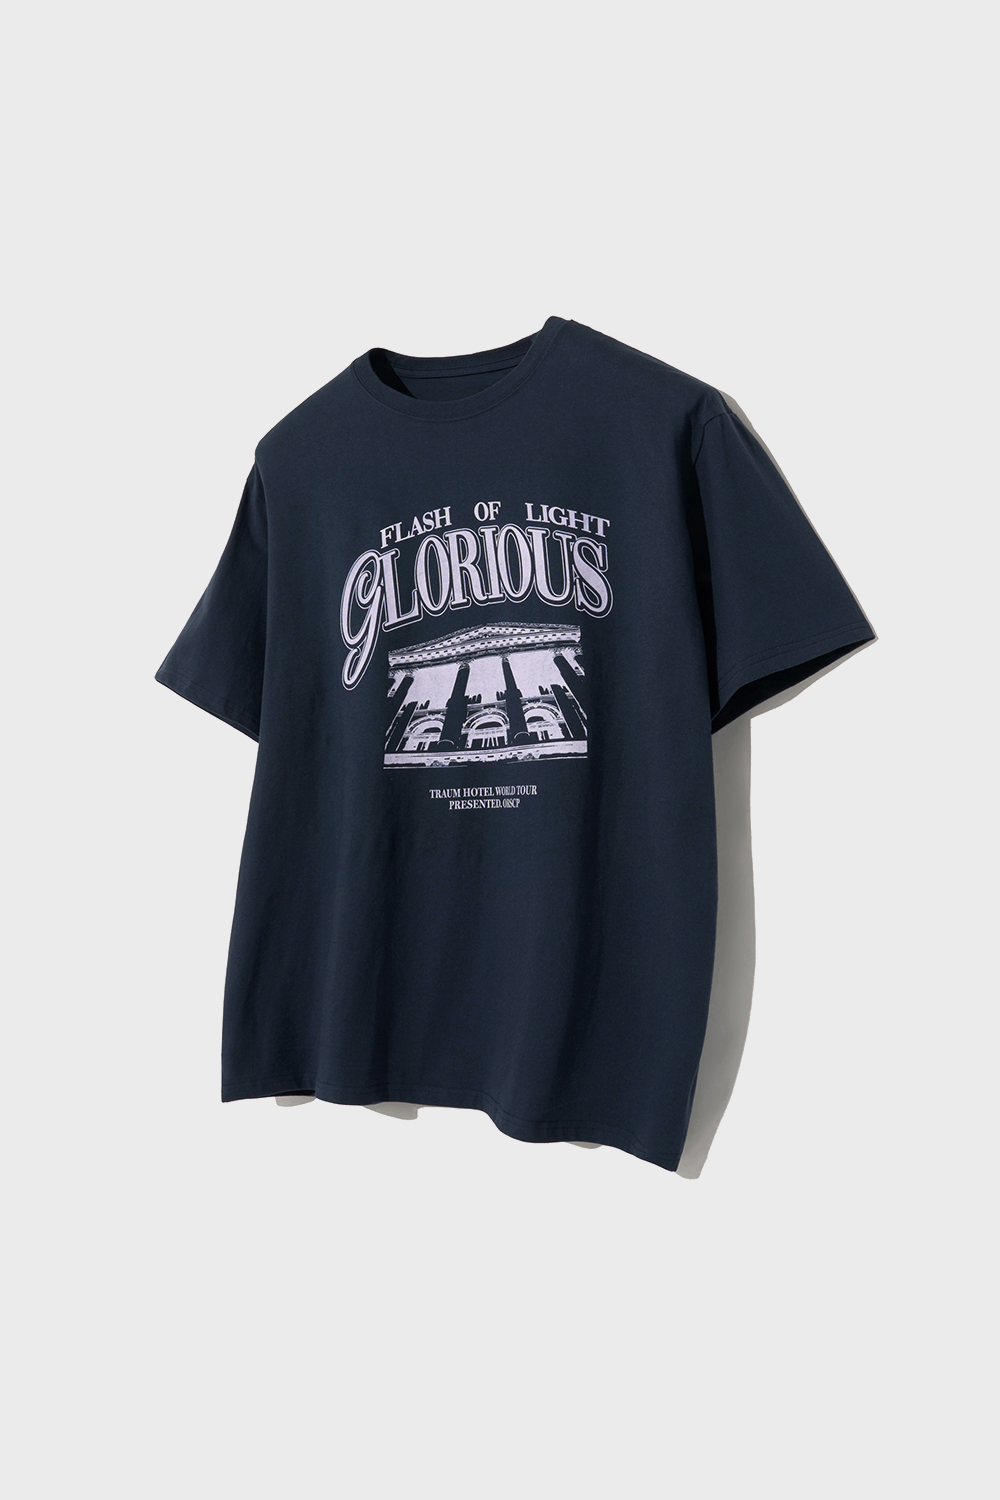 Glorious T-Shirts (Navy)